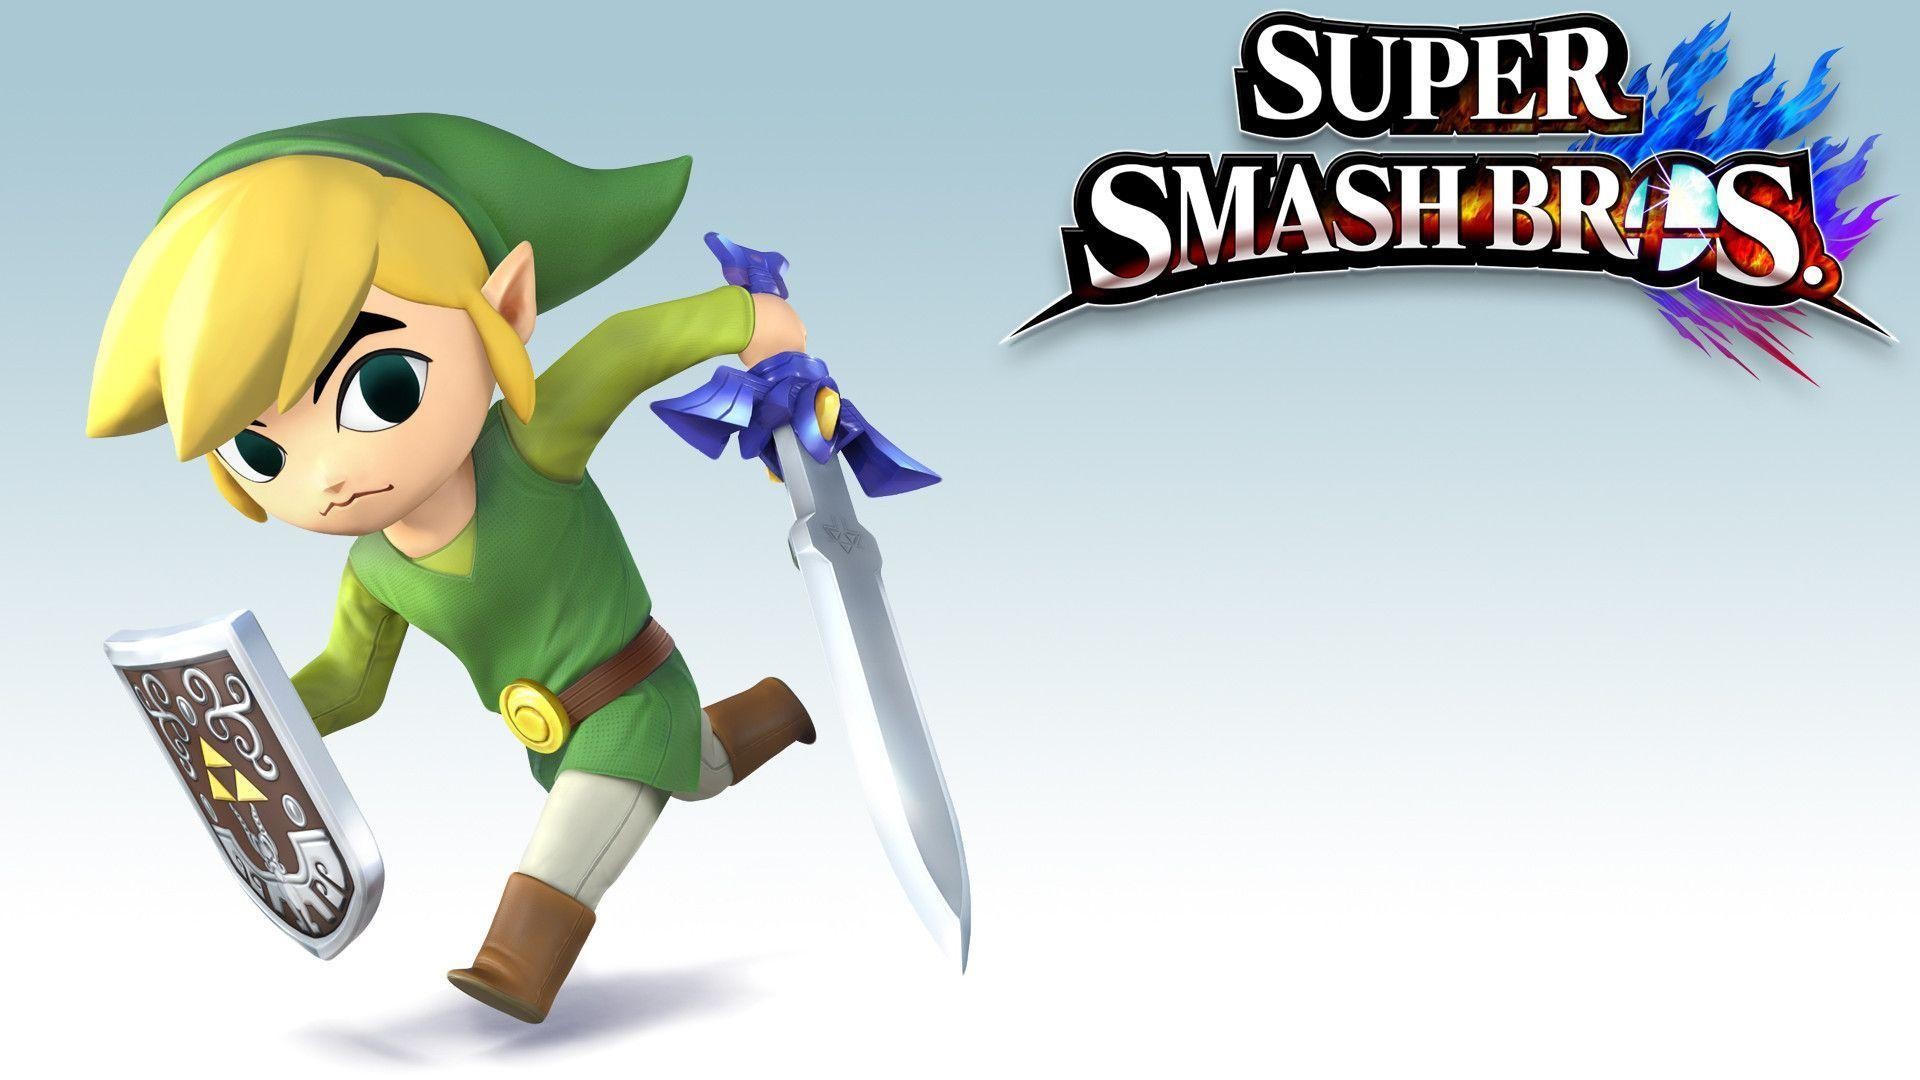 Toon Link - Super Smash Bros Wallpaper px Free Download.